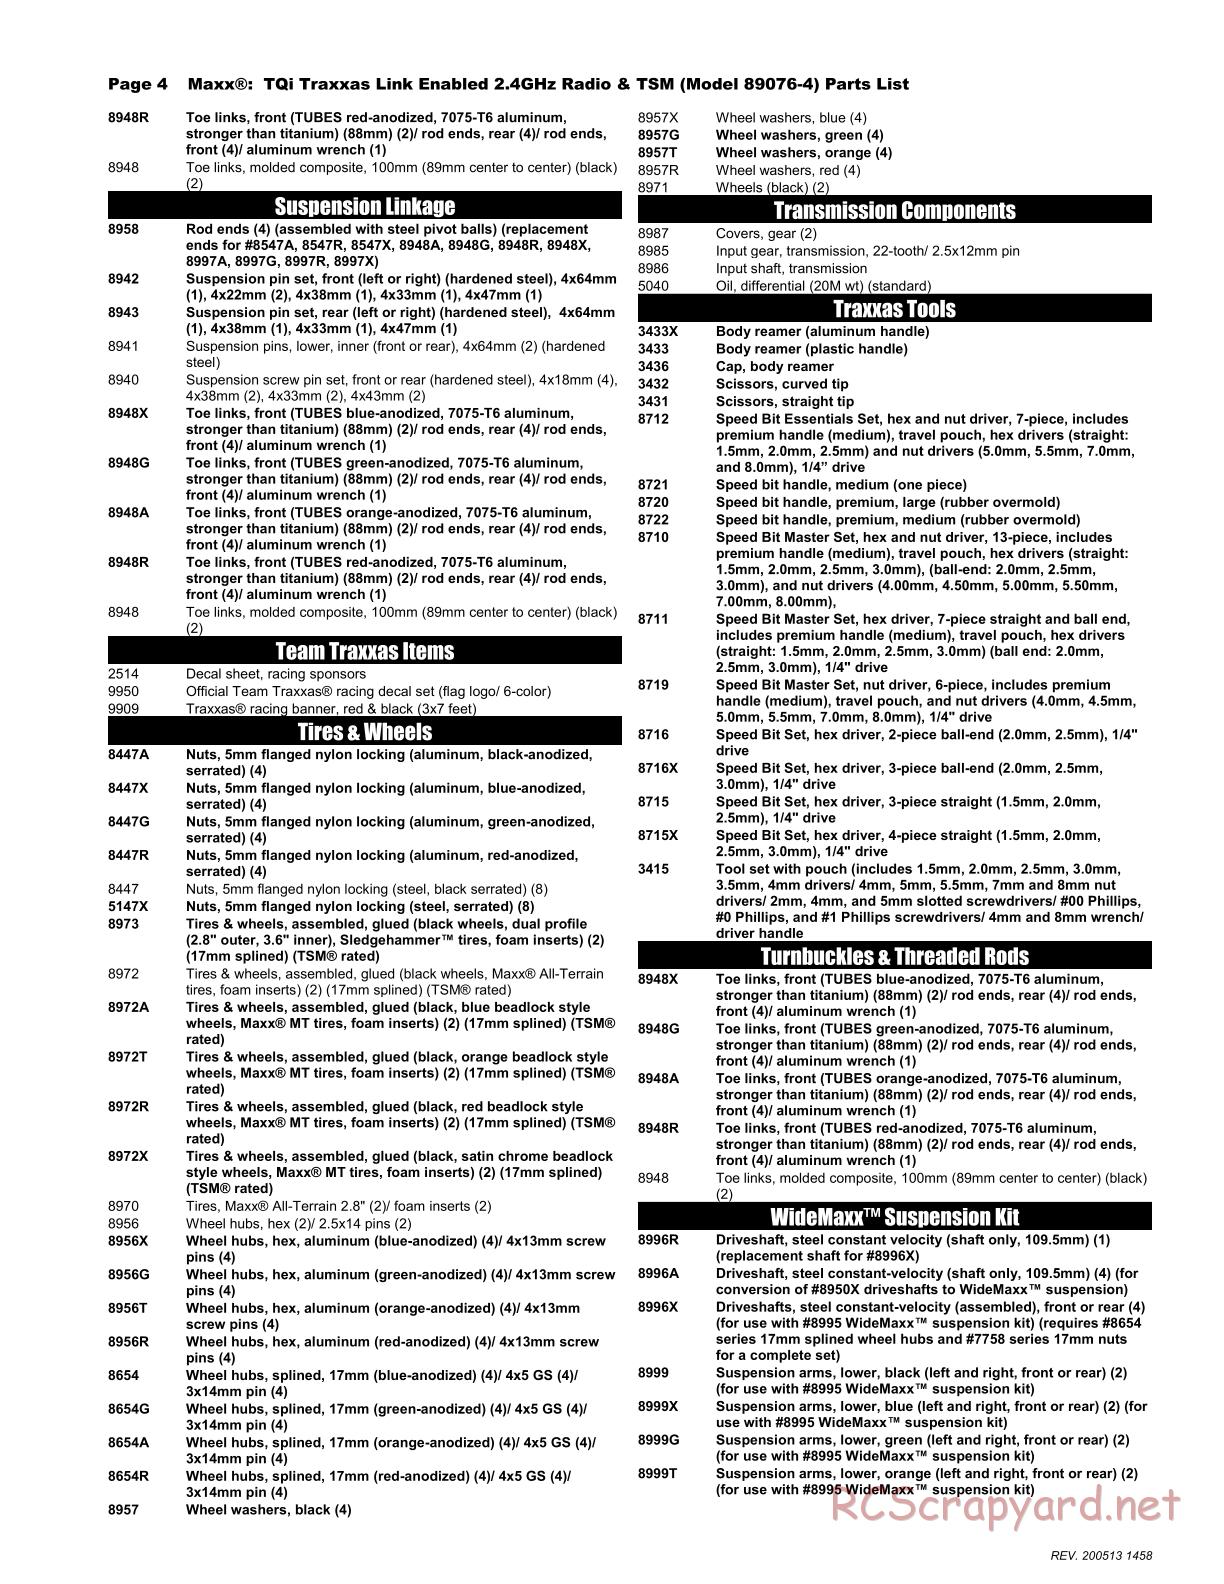 Traxxas - Maxx - Parts List - Page 4